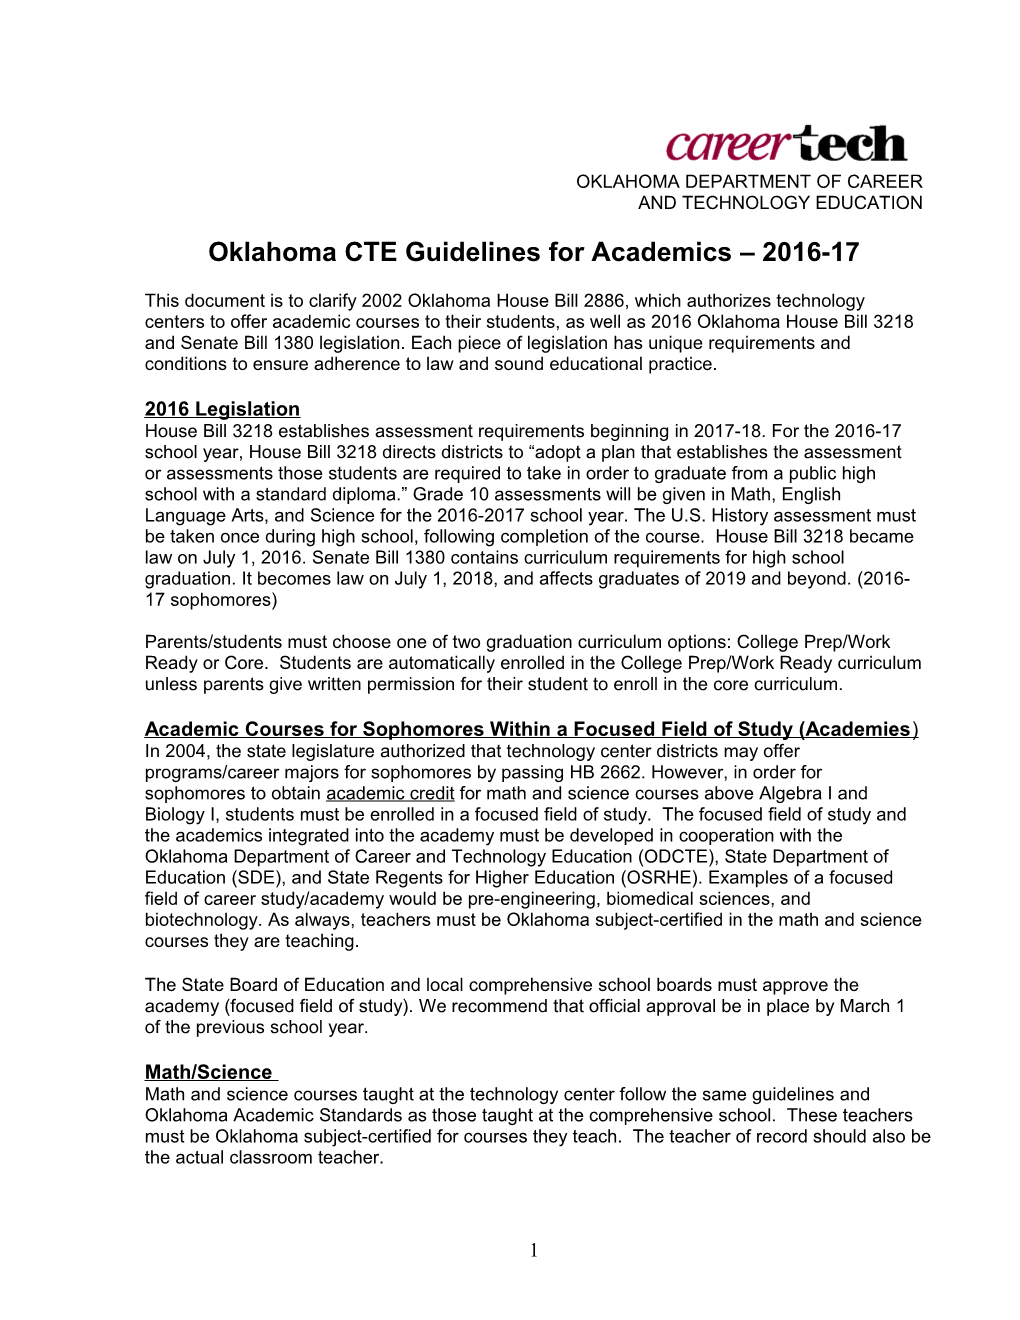 Oklahoma CTE Guidelines for Academics 2016-17